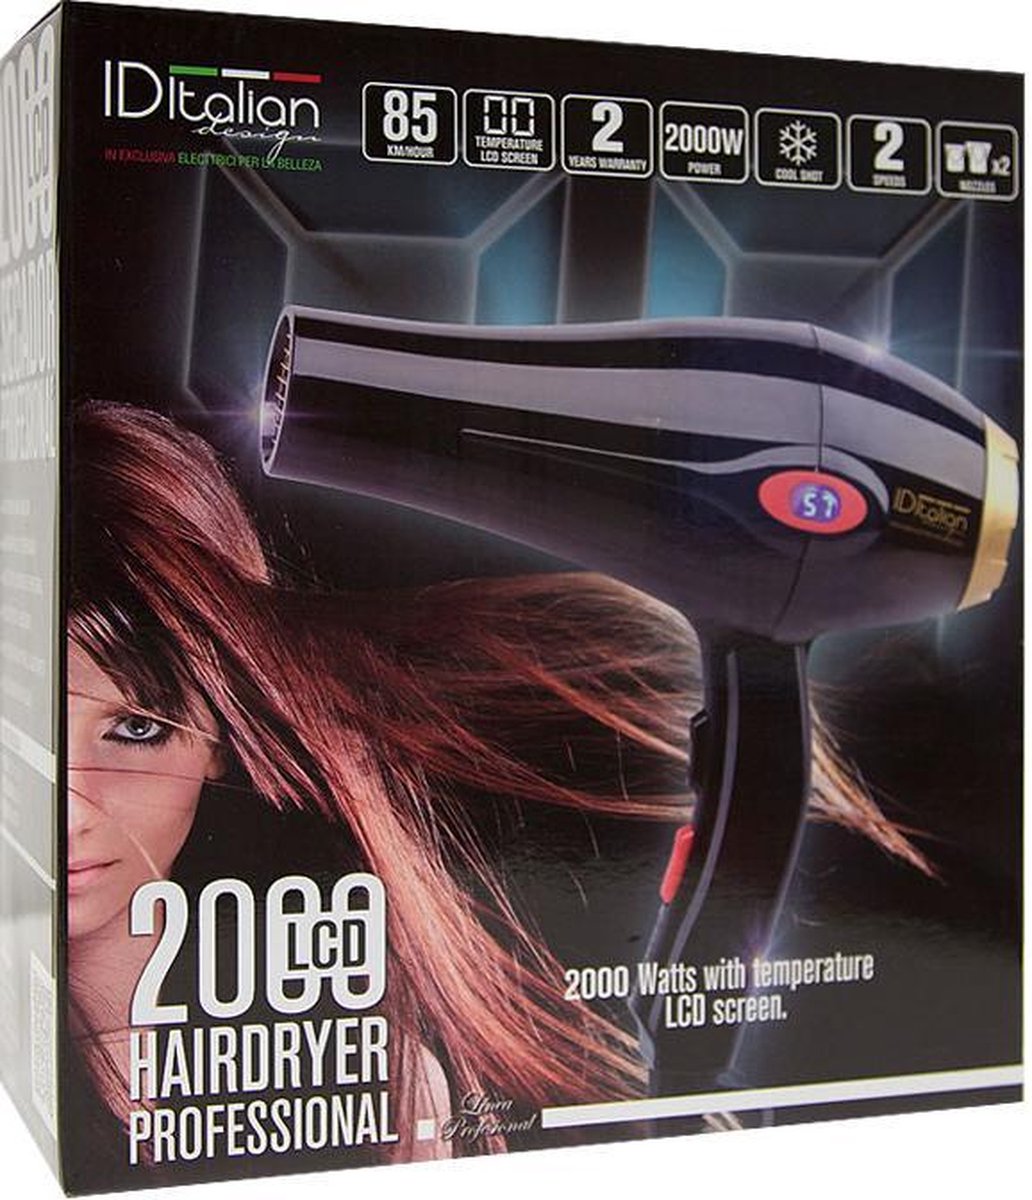 IDItalian2000LCD professional Hairdryer